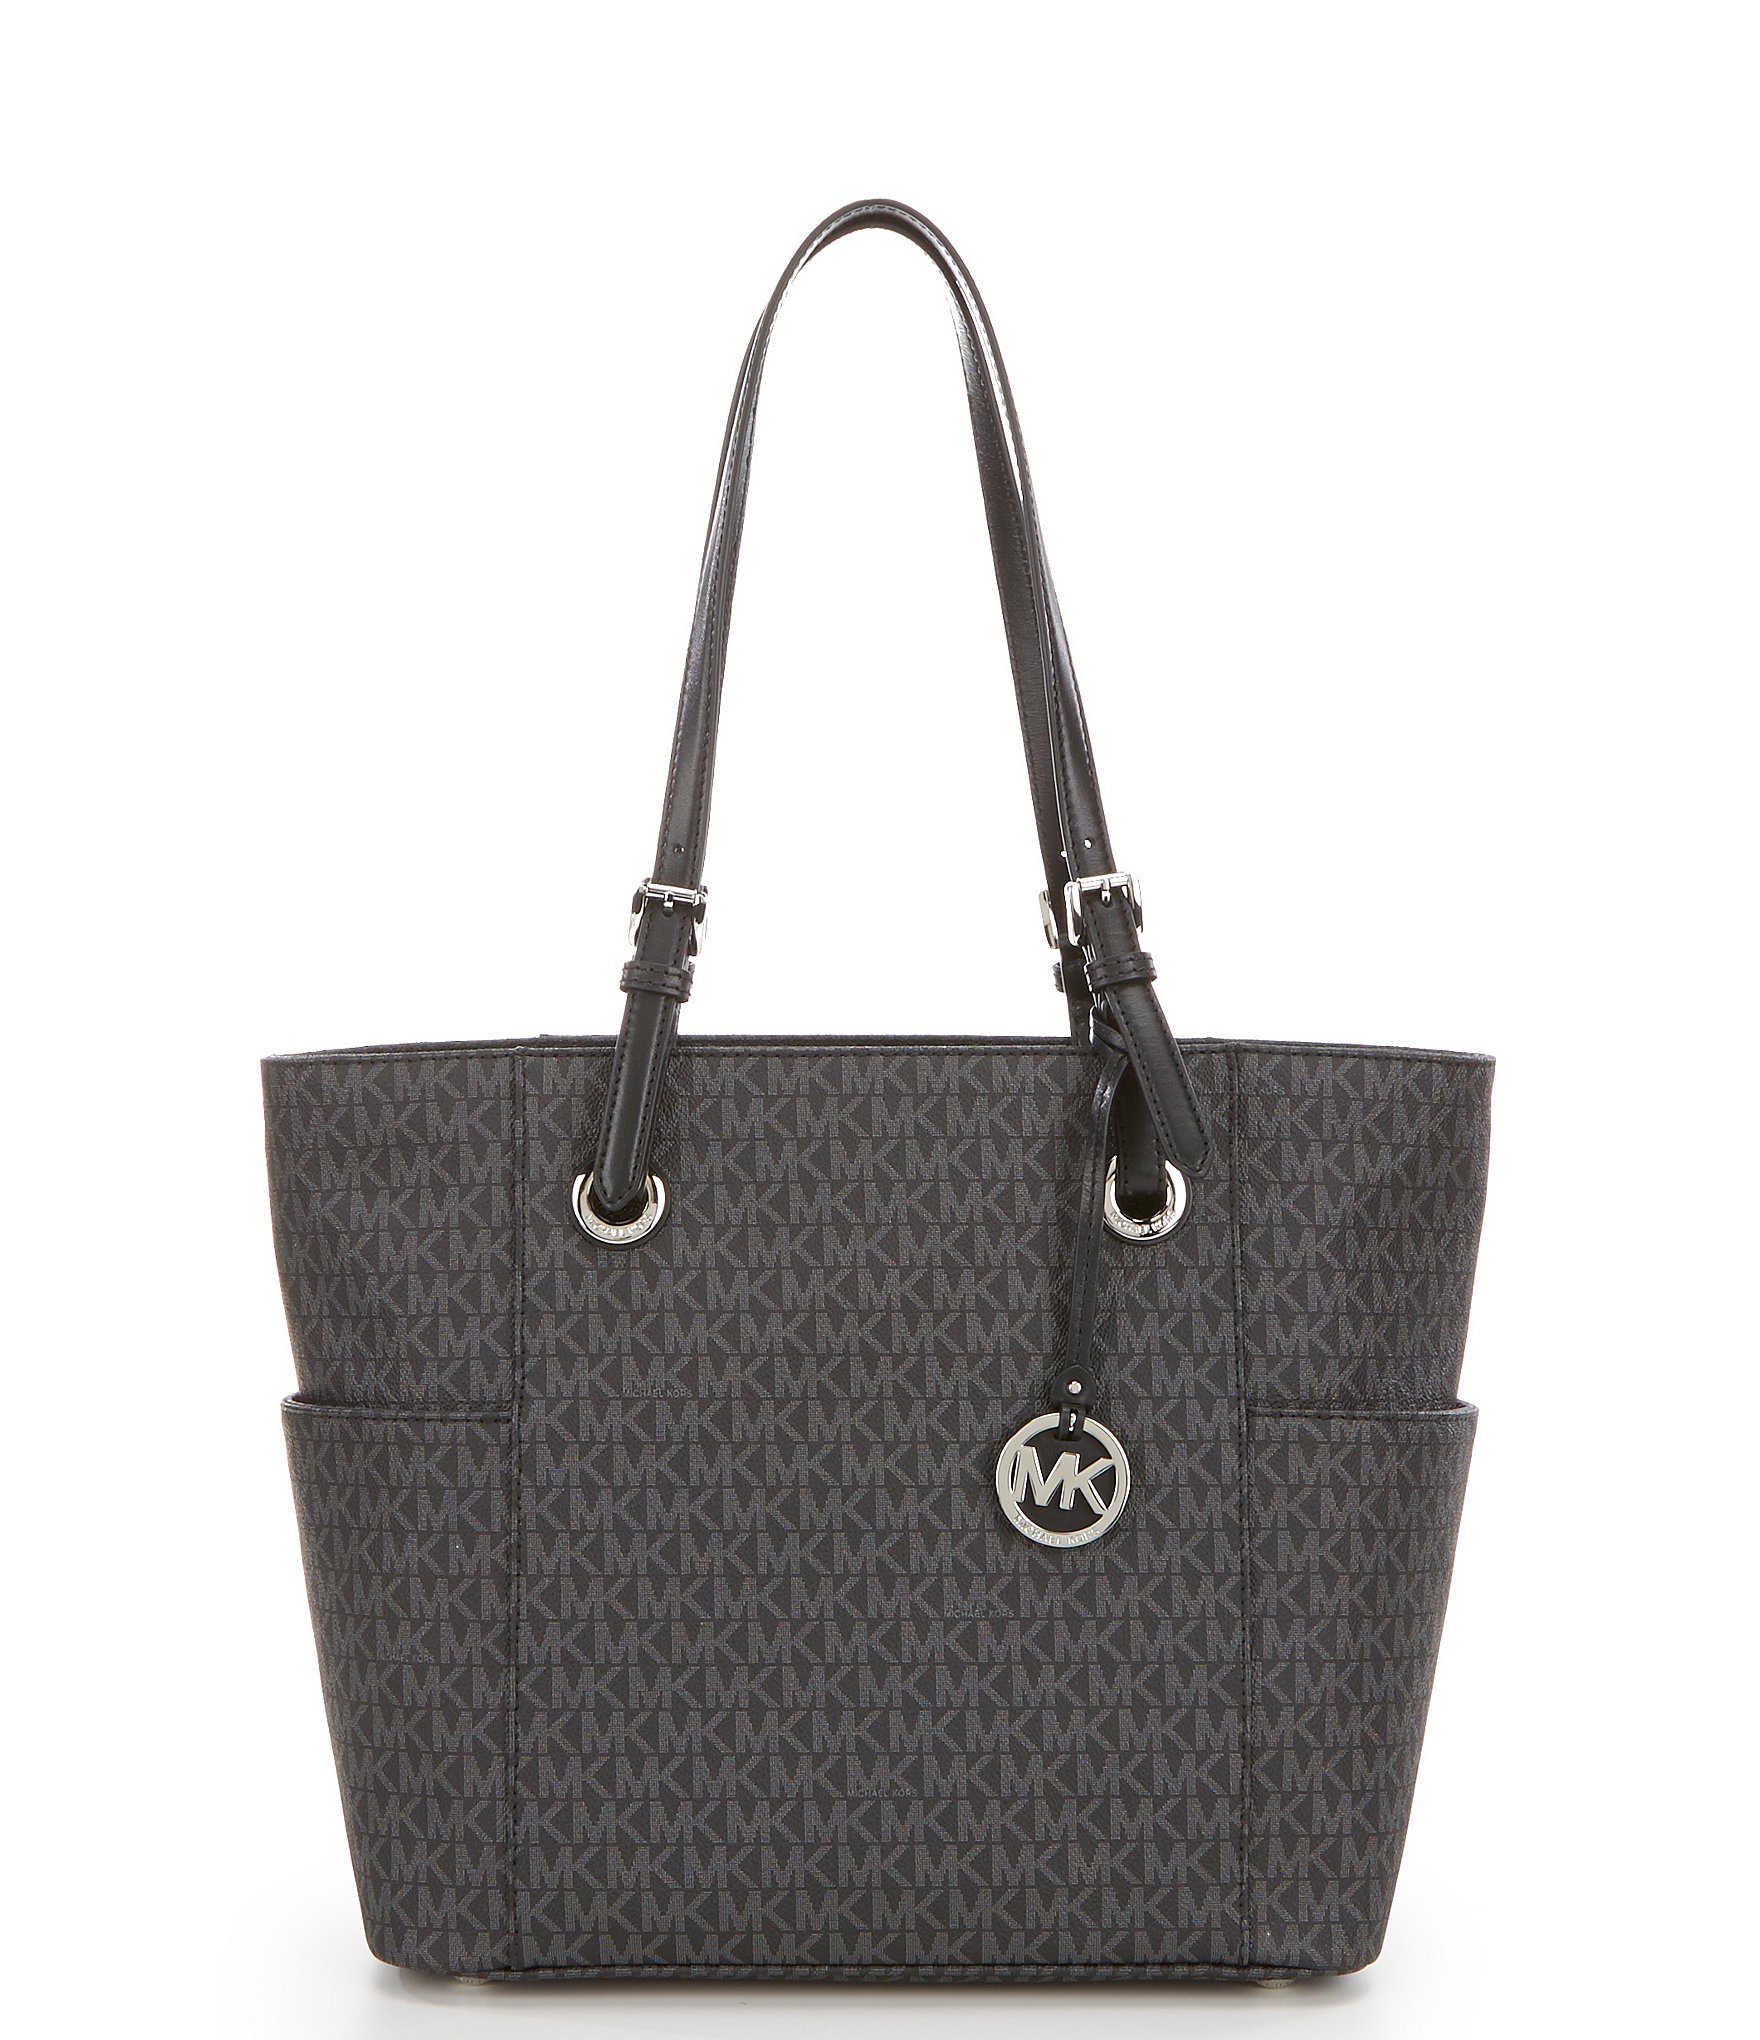 Ebay Com Michael Kors Handbags: Michael Kors Handbags Dillards Sale